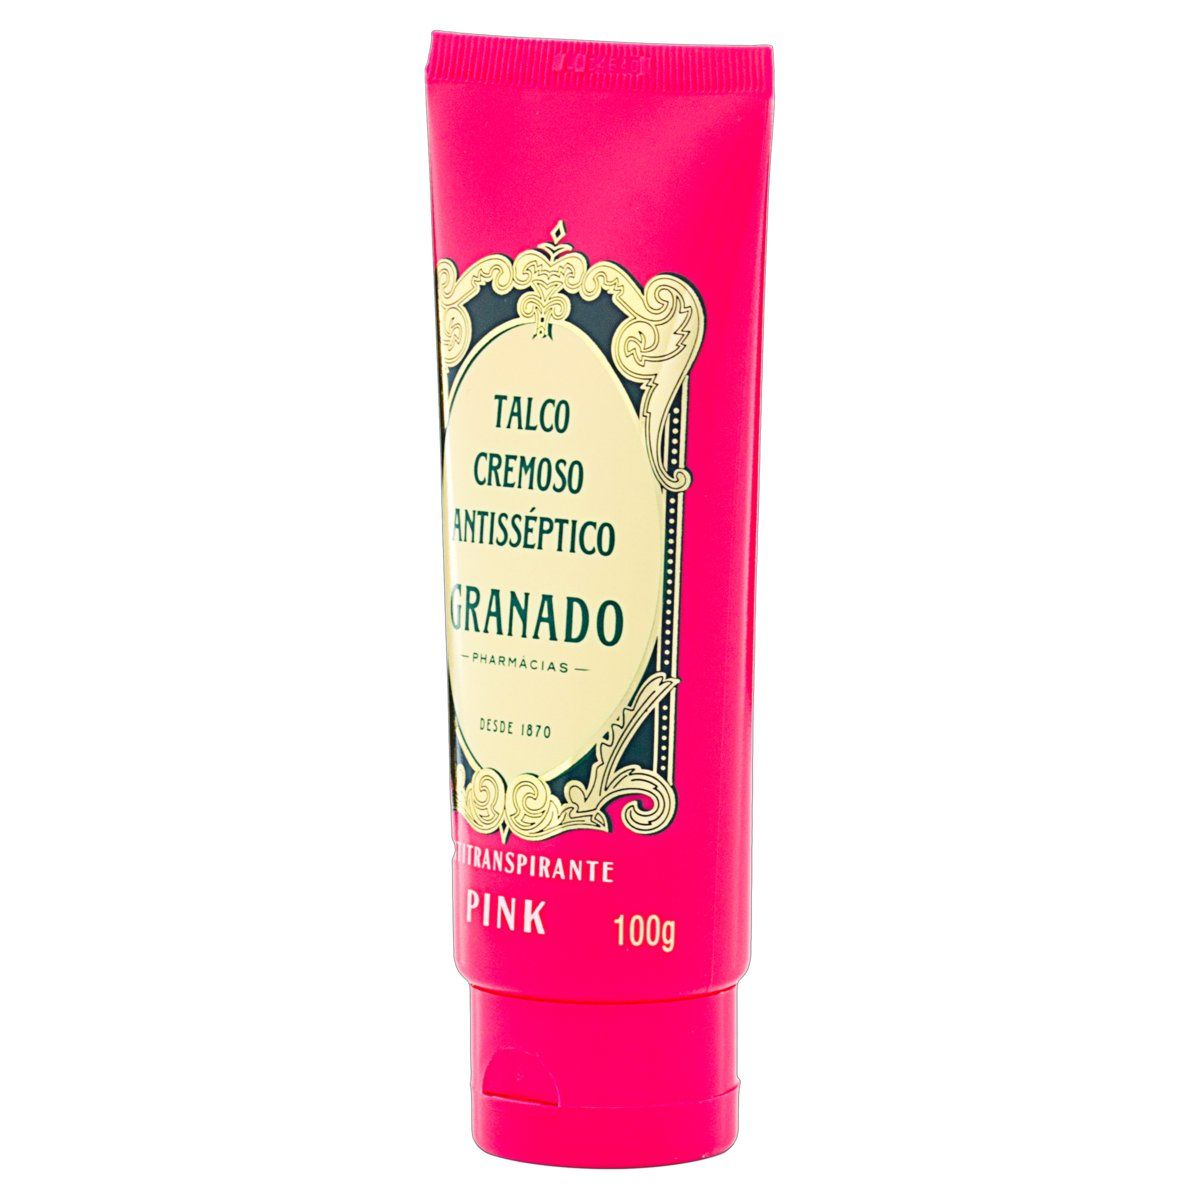 Talco Cremoso Antisséptico Granado Pink Bisnaga 100g image number 2